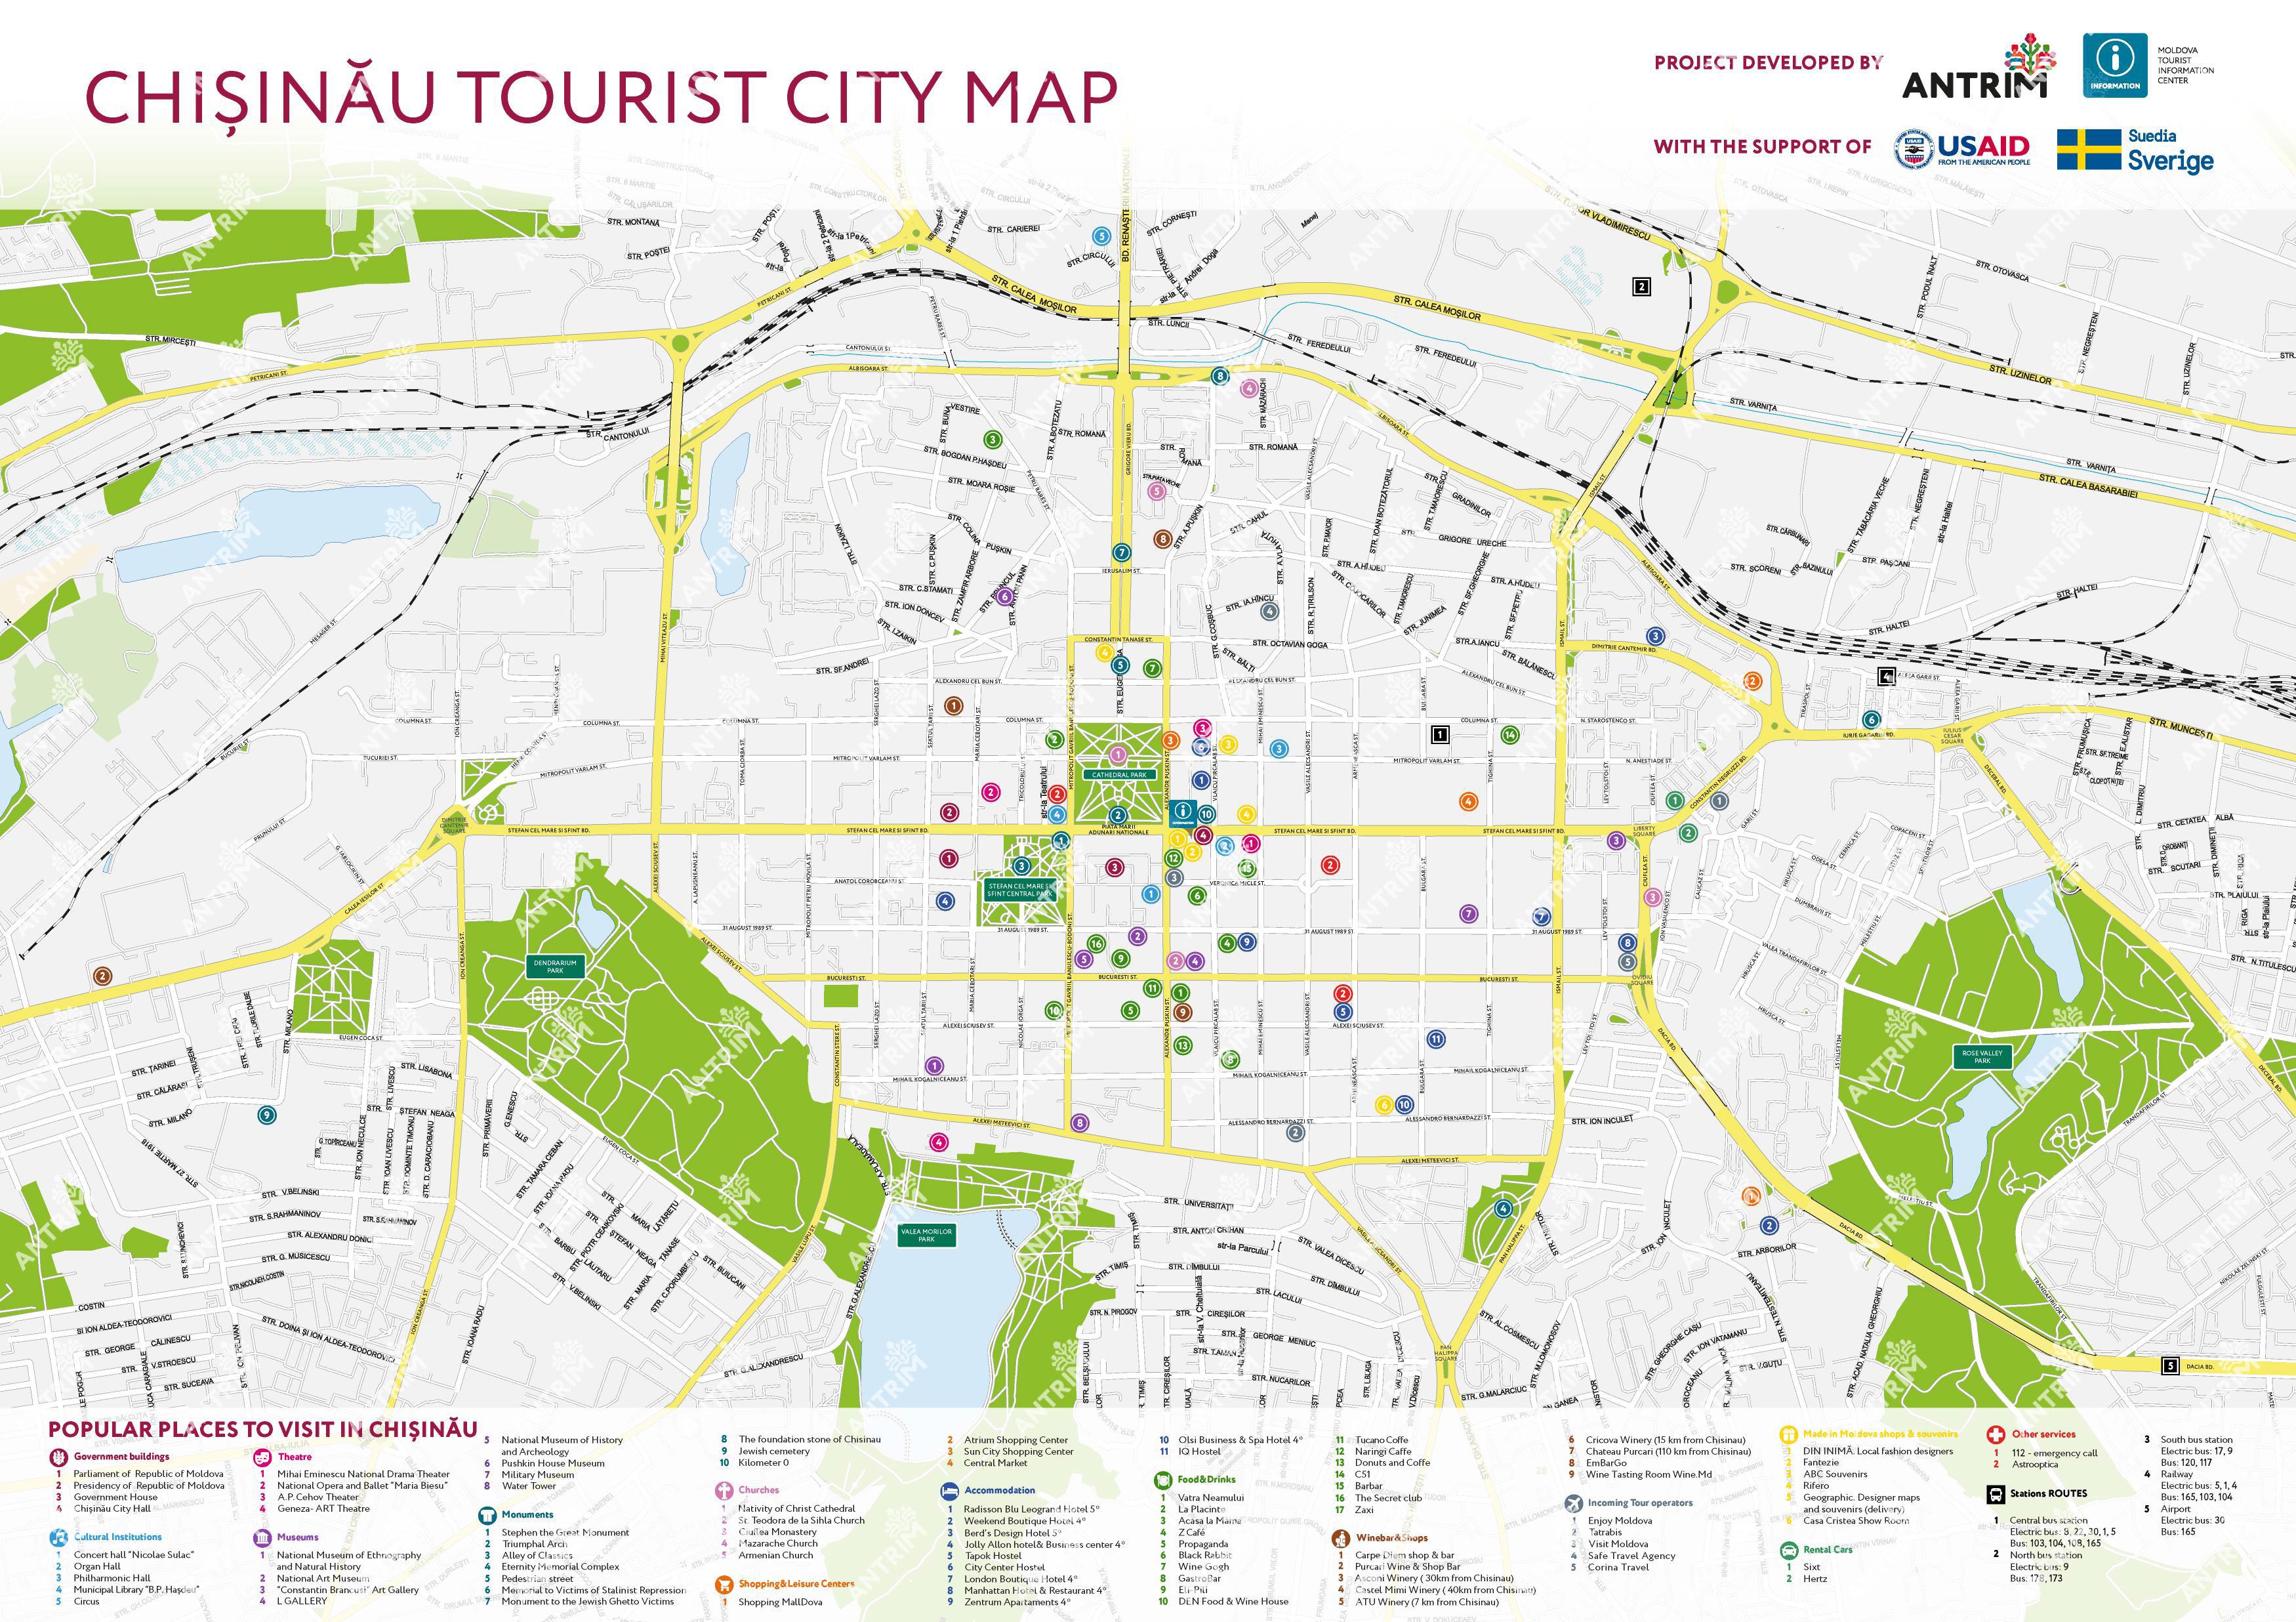 Chisinau Tourist City Map A copyright antrim.md